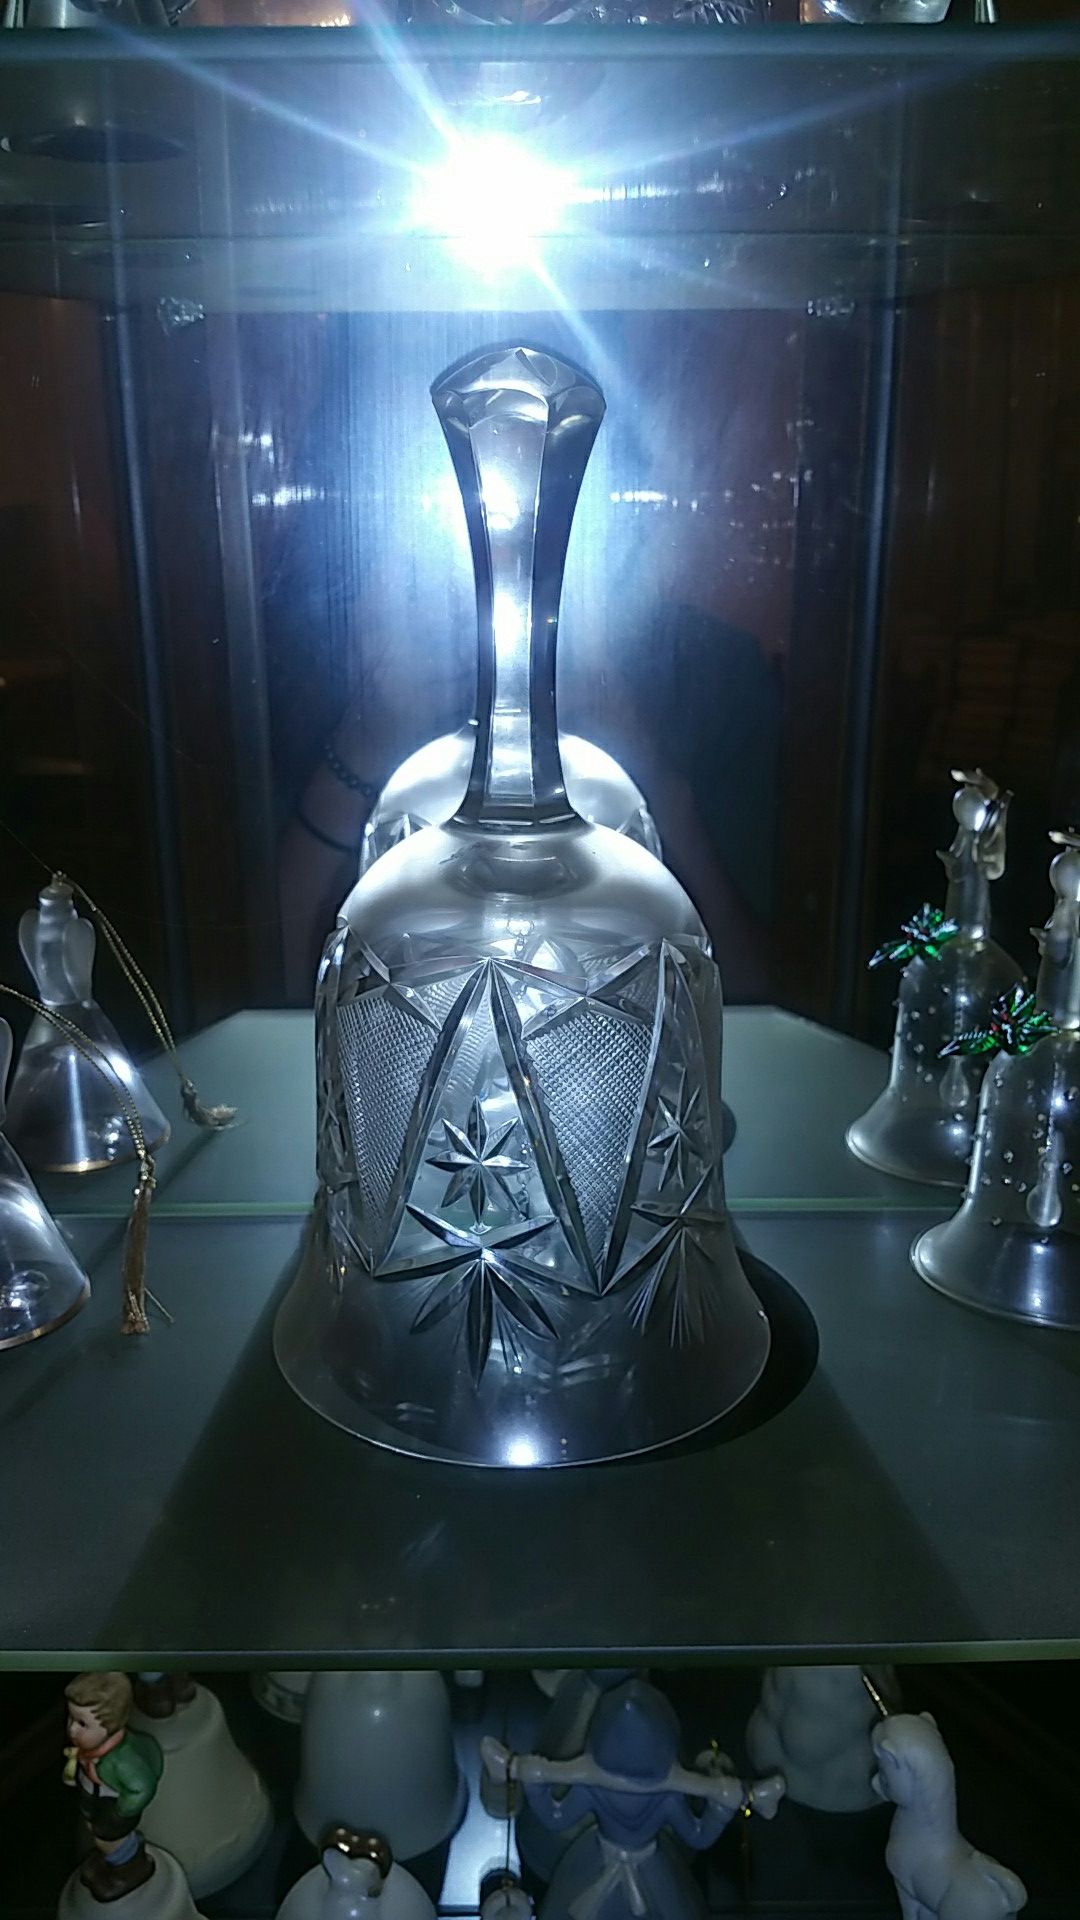 Waterford Crystal wedding bell